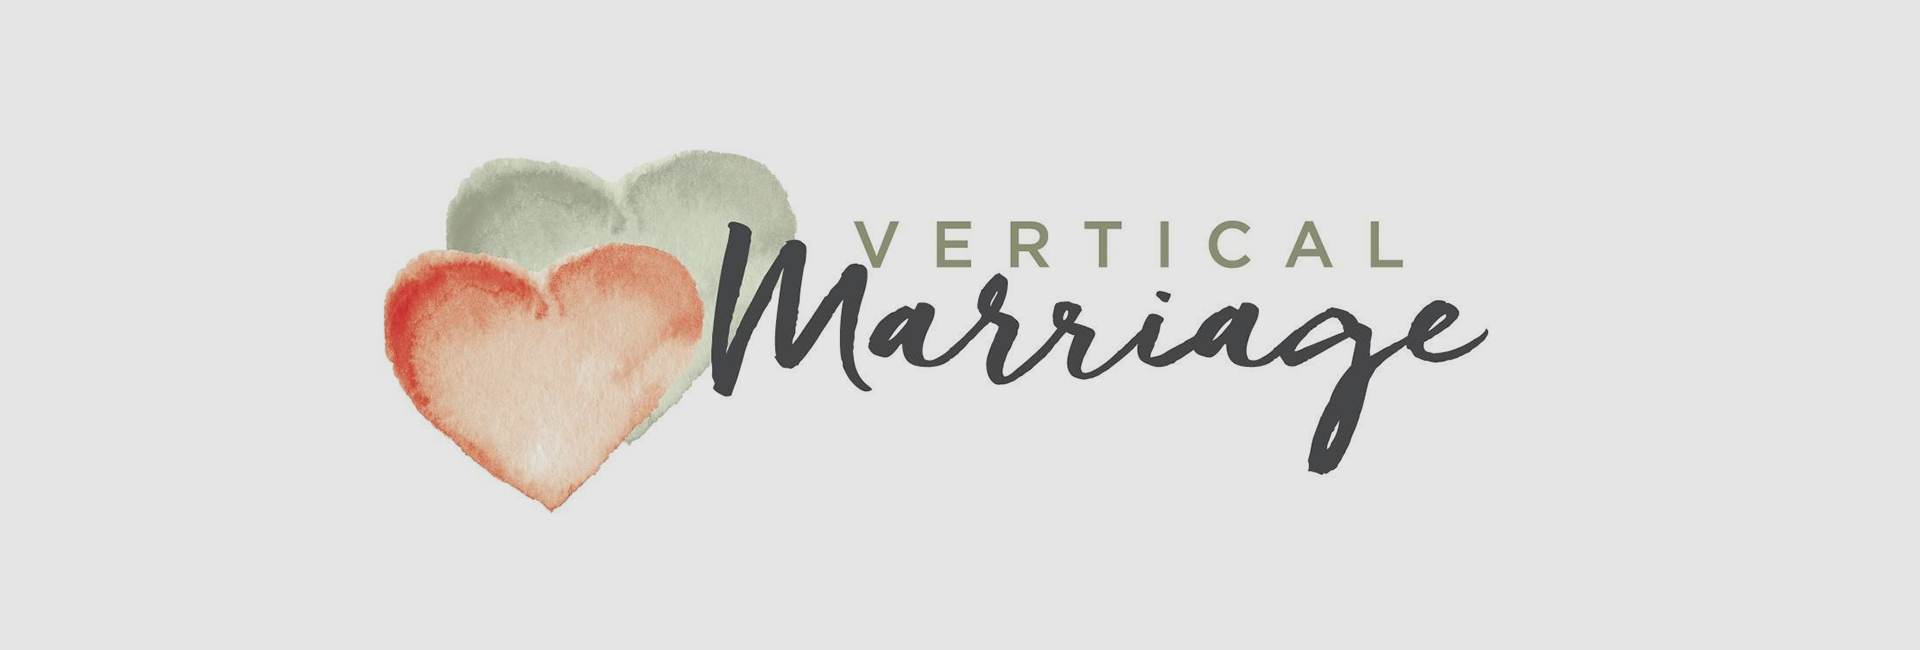 vertical marriage header